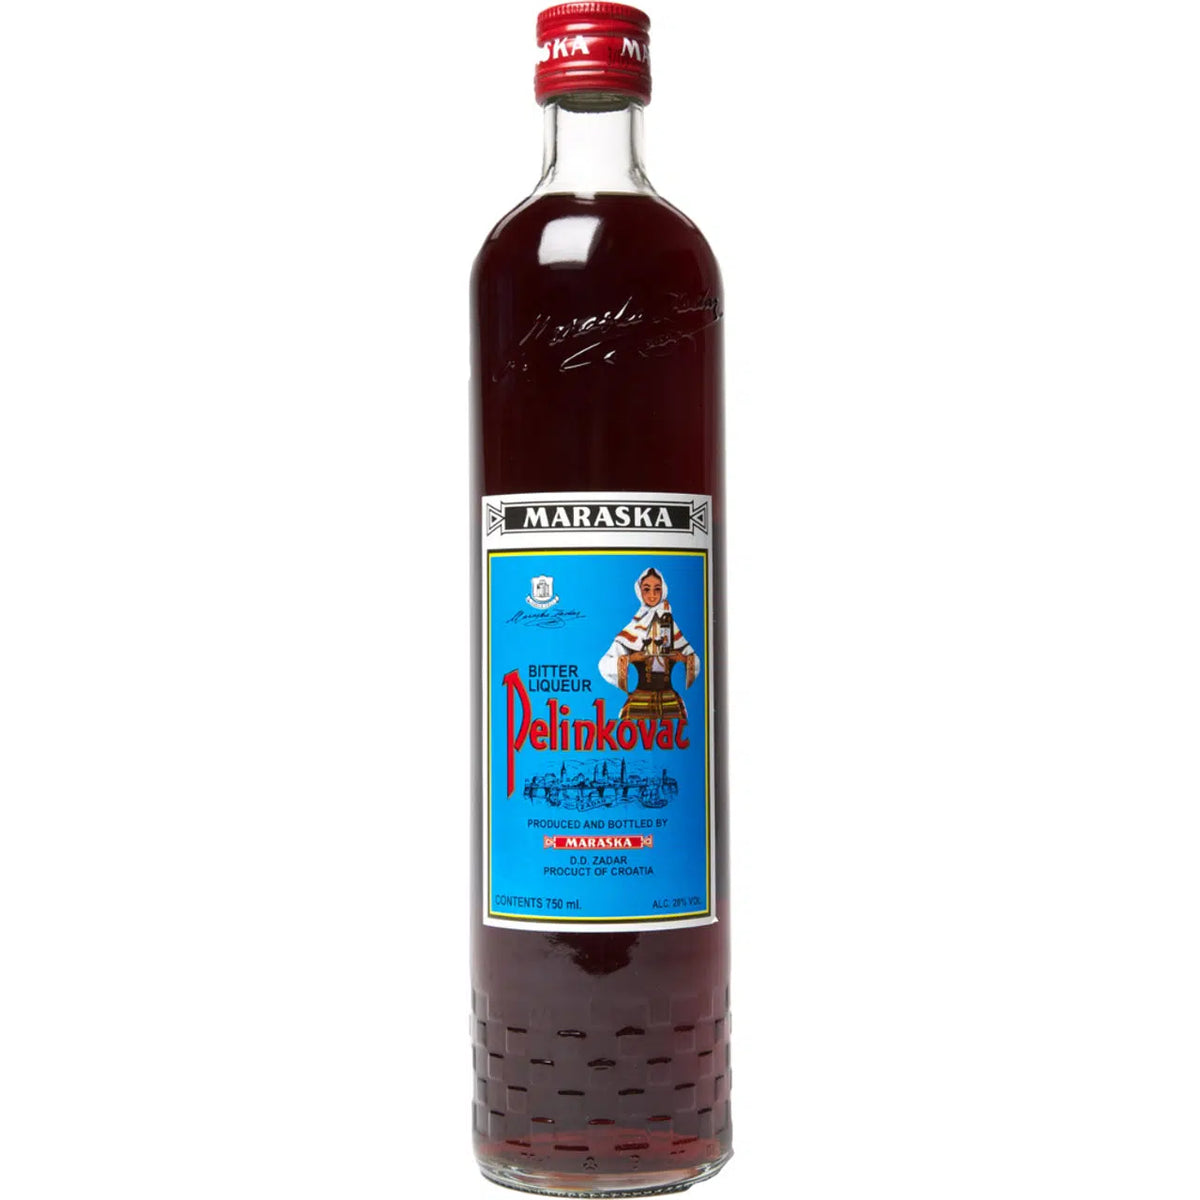 Maraska Pelinkovac Herbal Liqueur 700ml